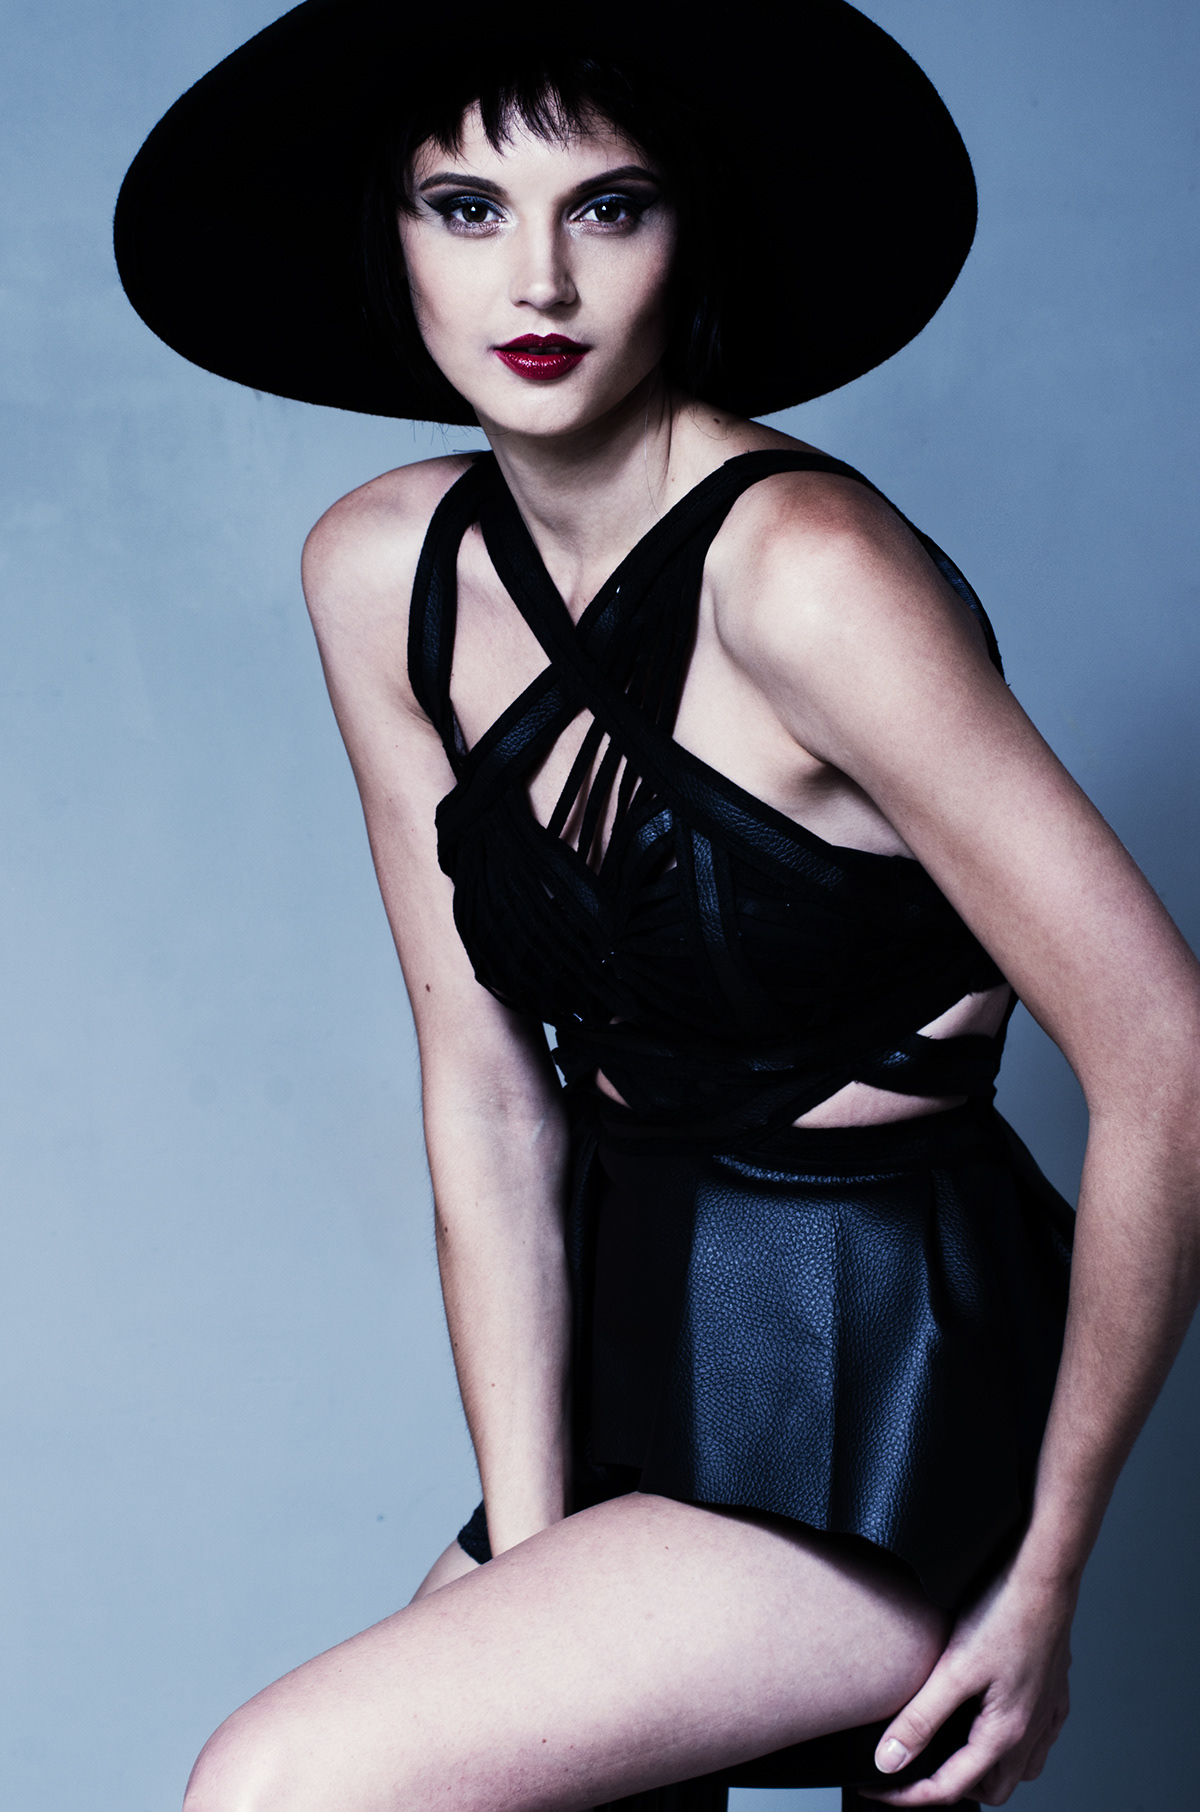 editorial fashion editorial high fashion portraits beauty model black leather latex